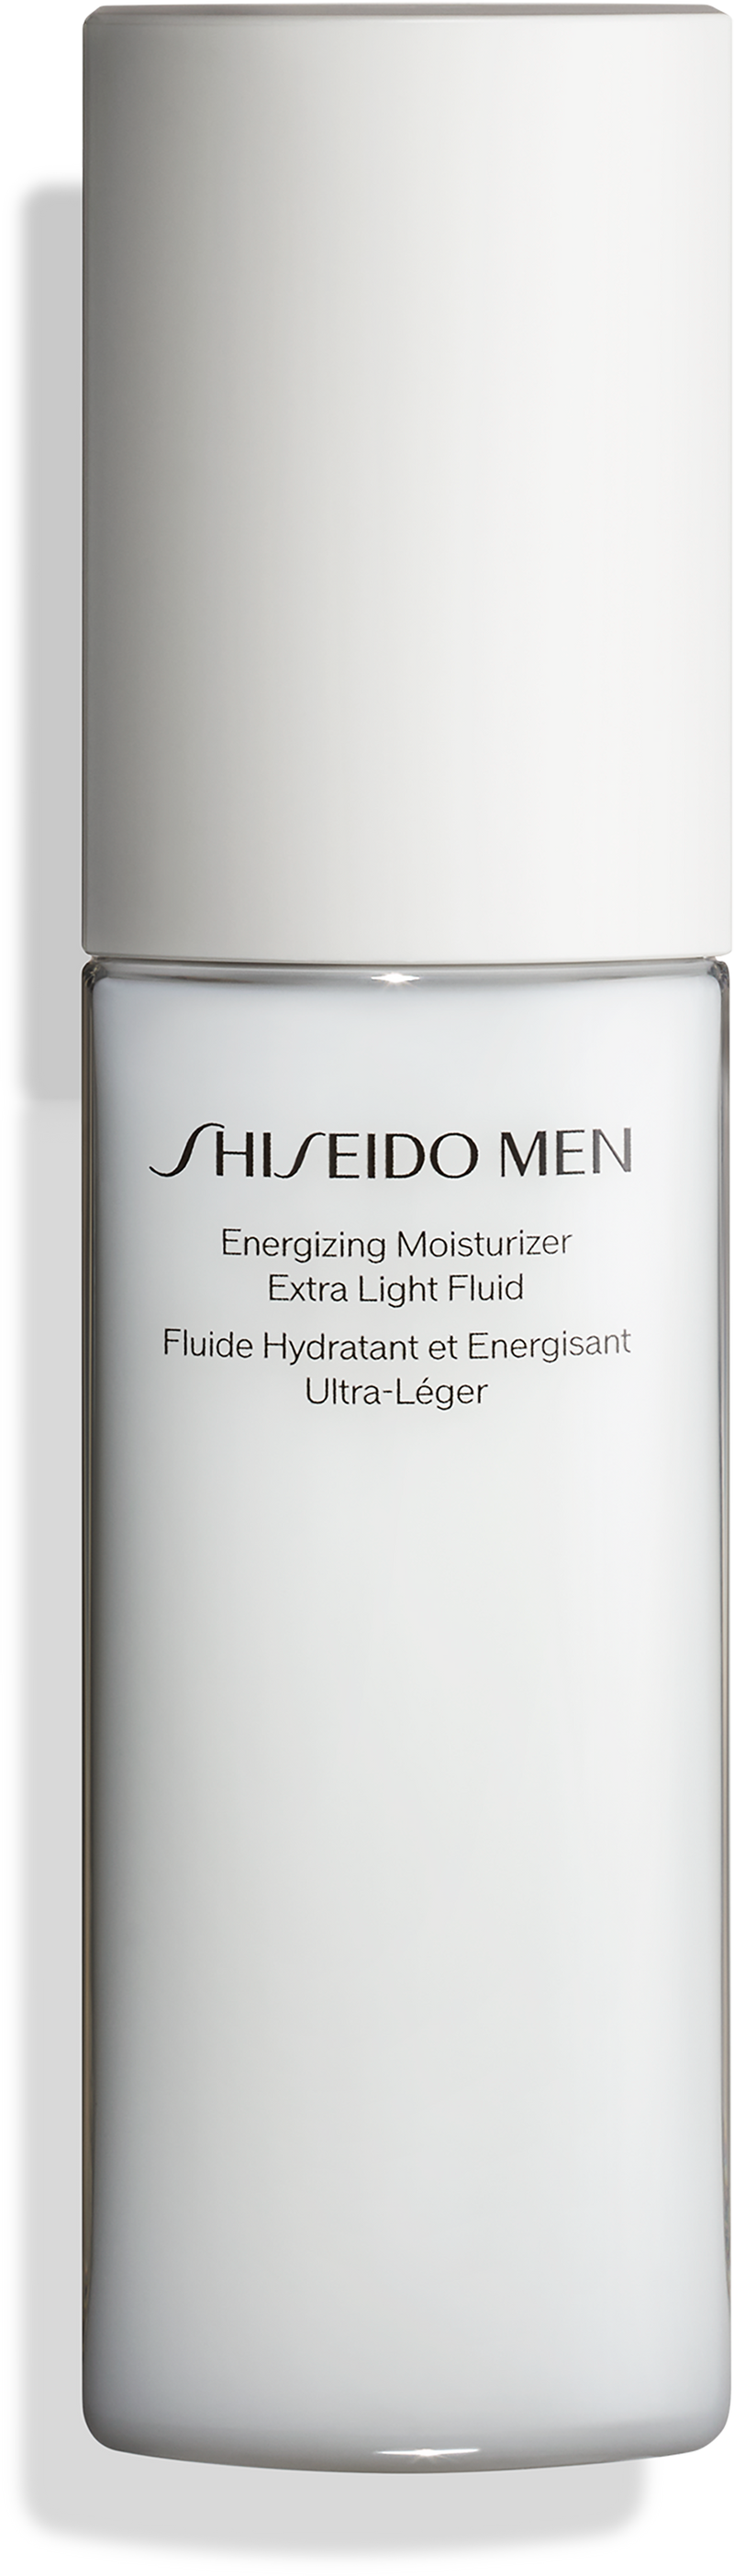 SHISEIDO - Fluide hydratant et énergisant ultra-léger